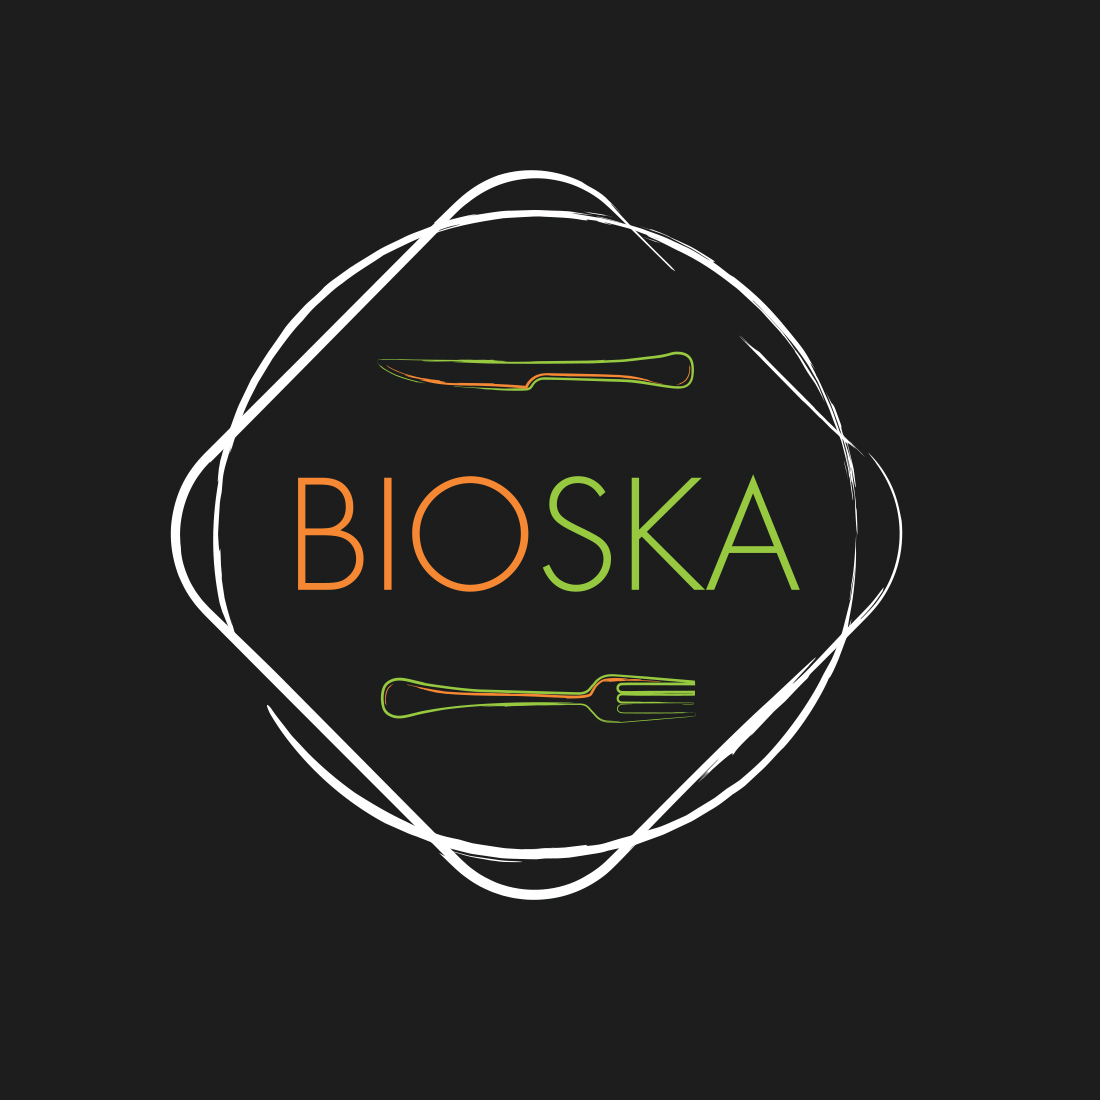 Bioska logo